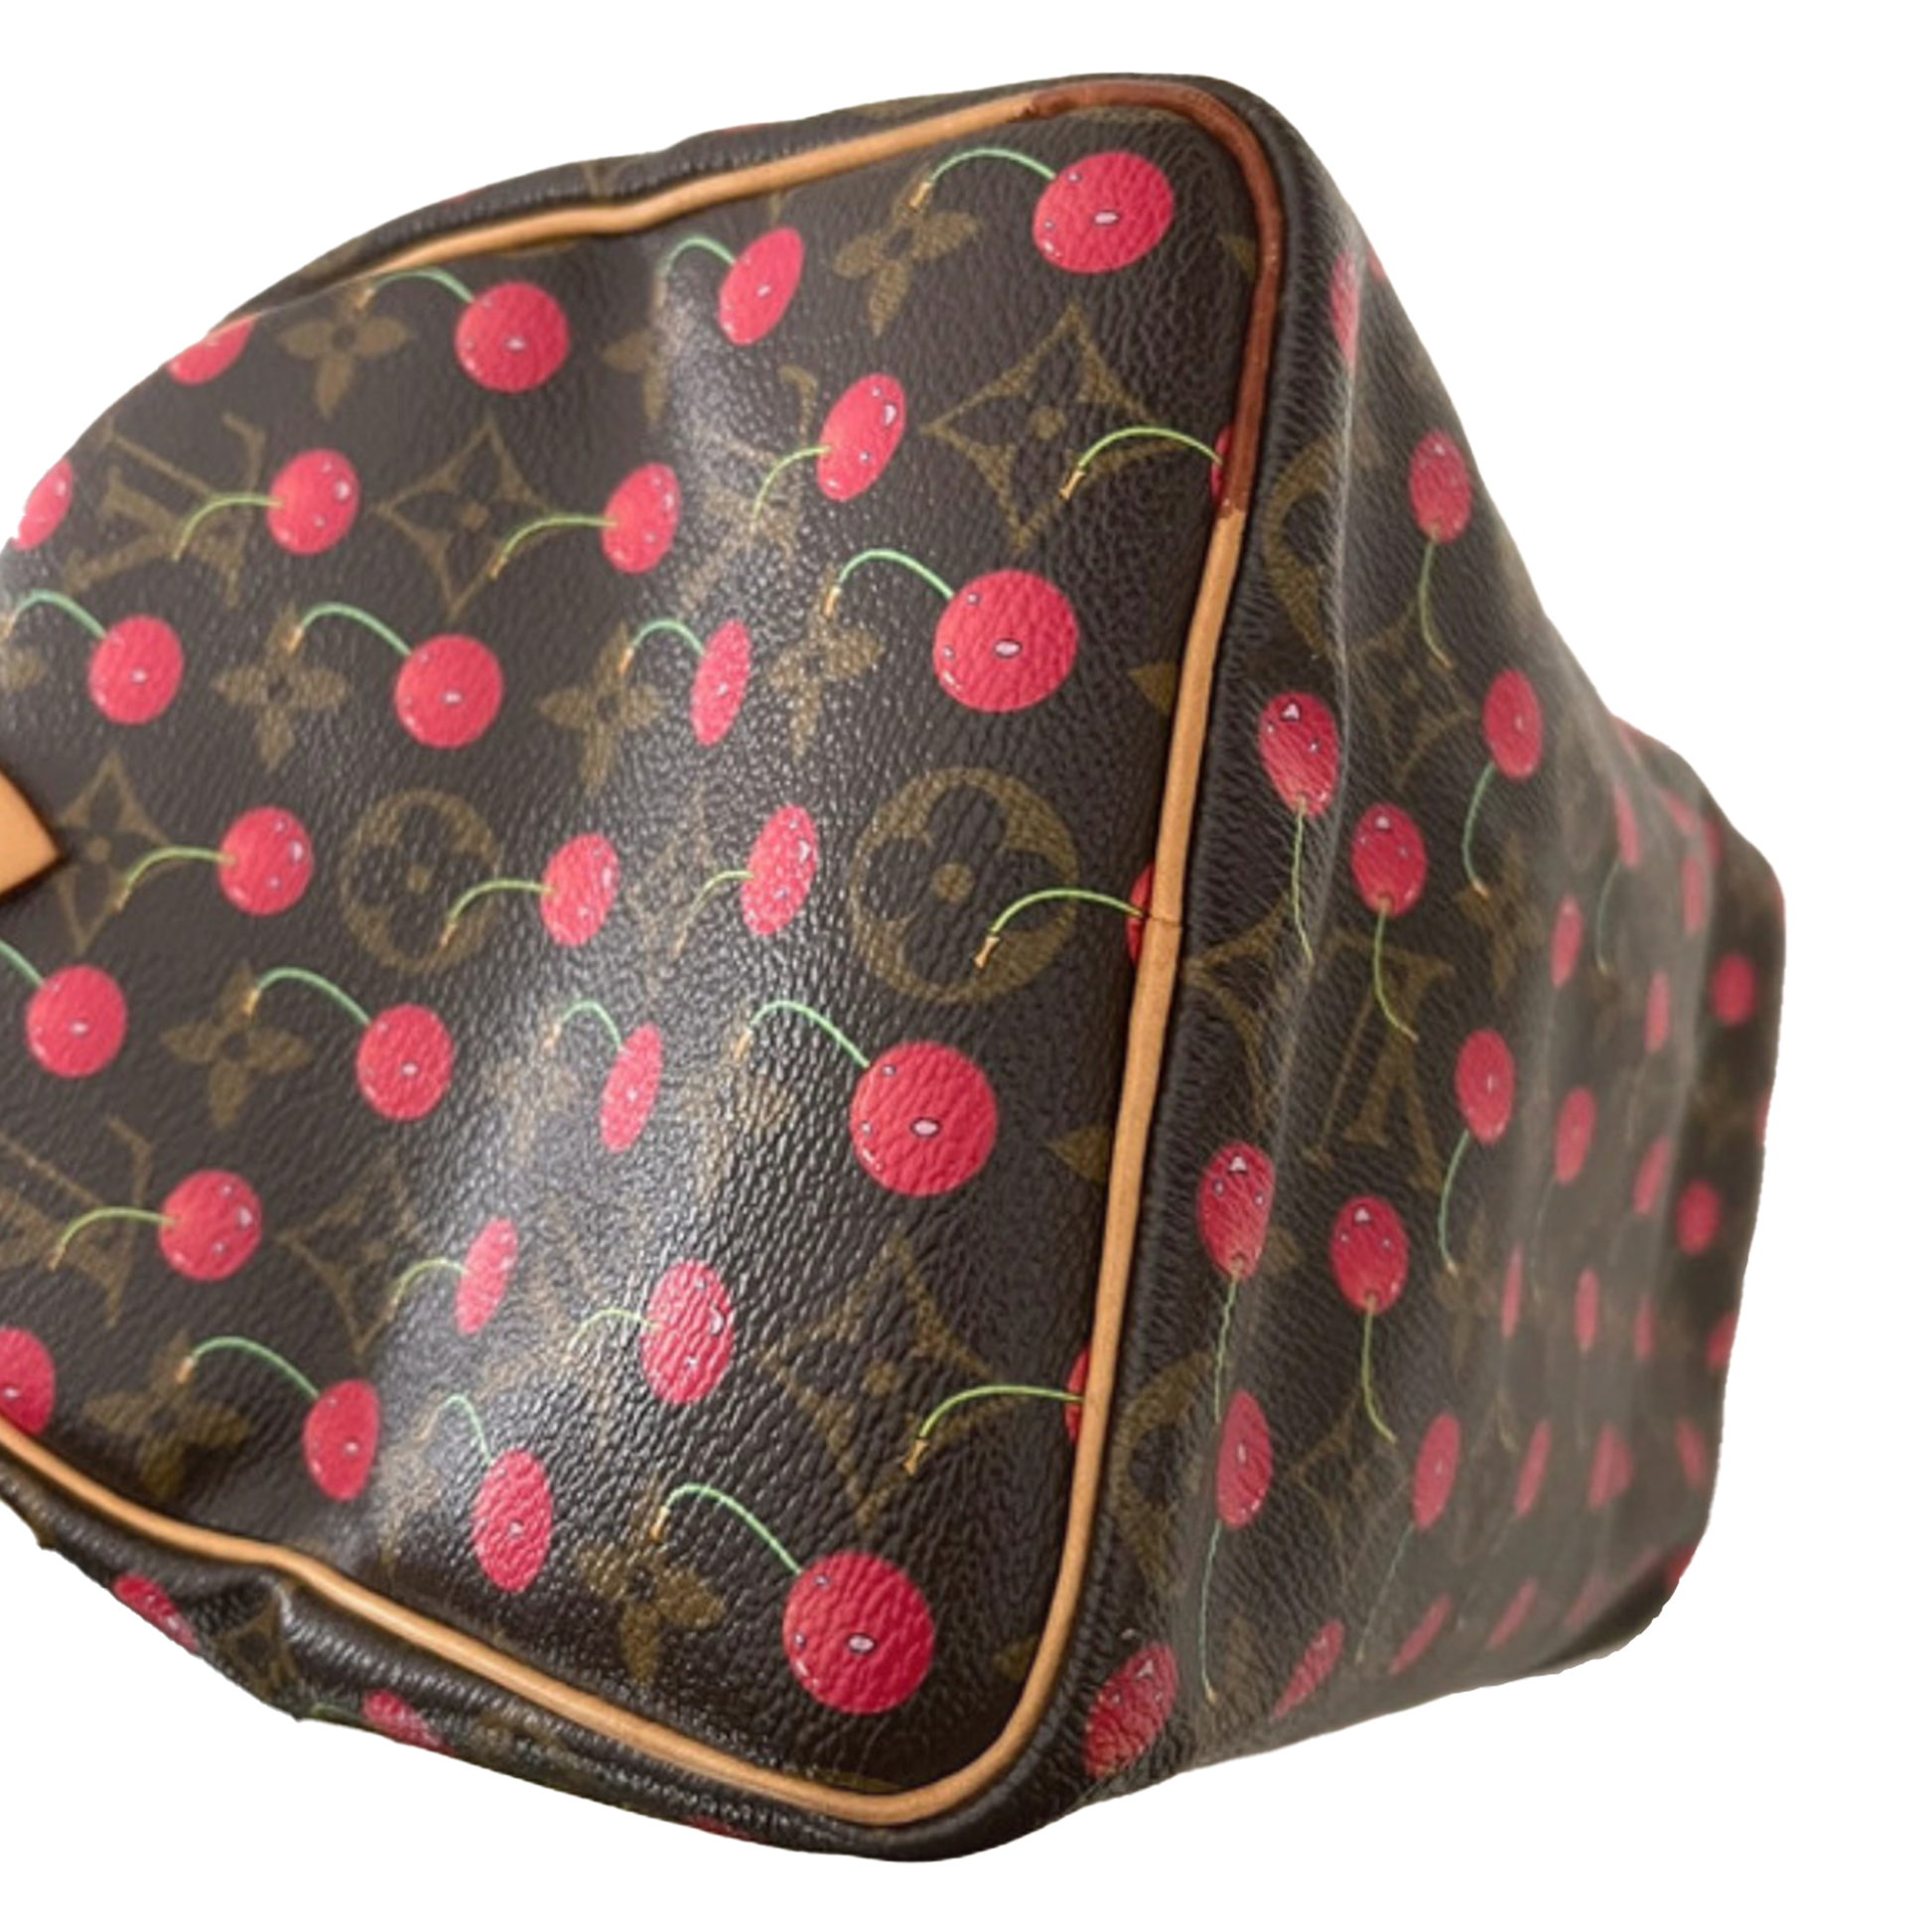 Louis Vuitton Cherry Speedy 25 Handbag by Takashi Murakami – vintagebonbon